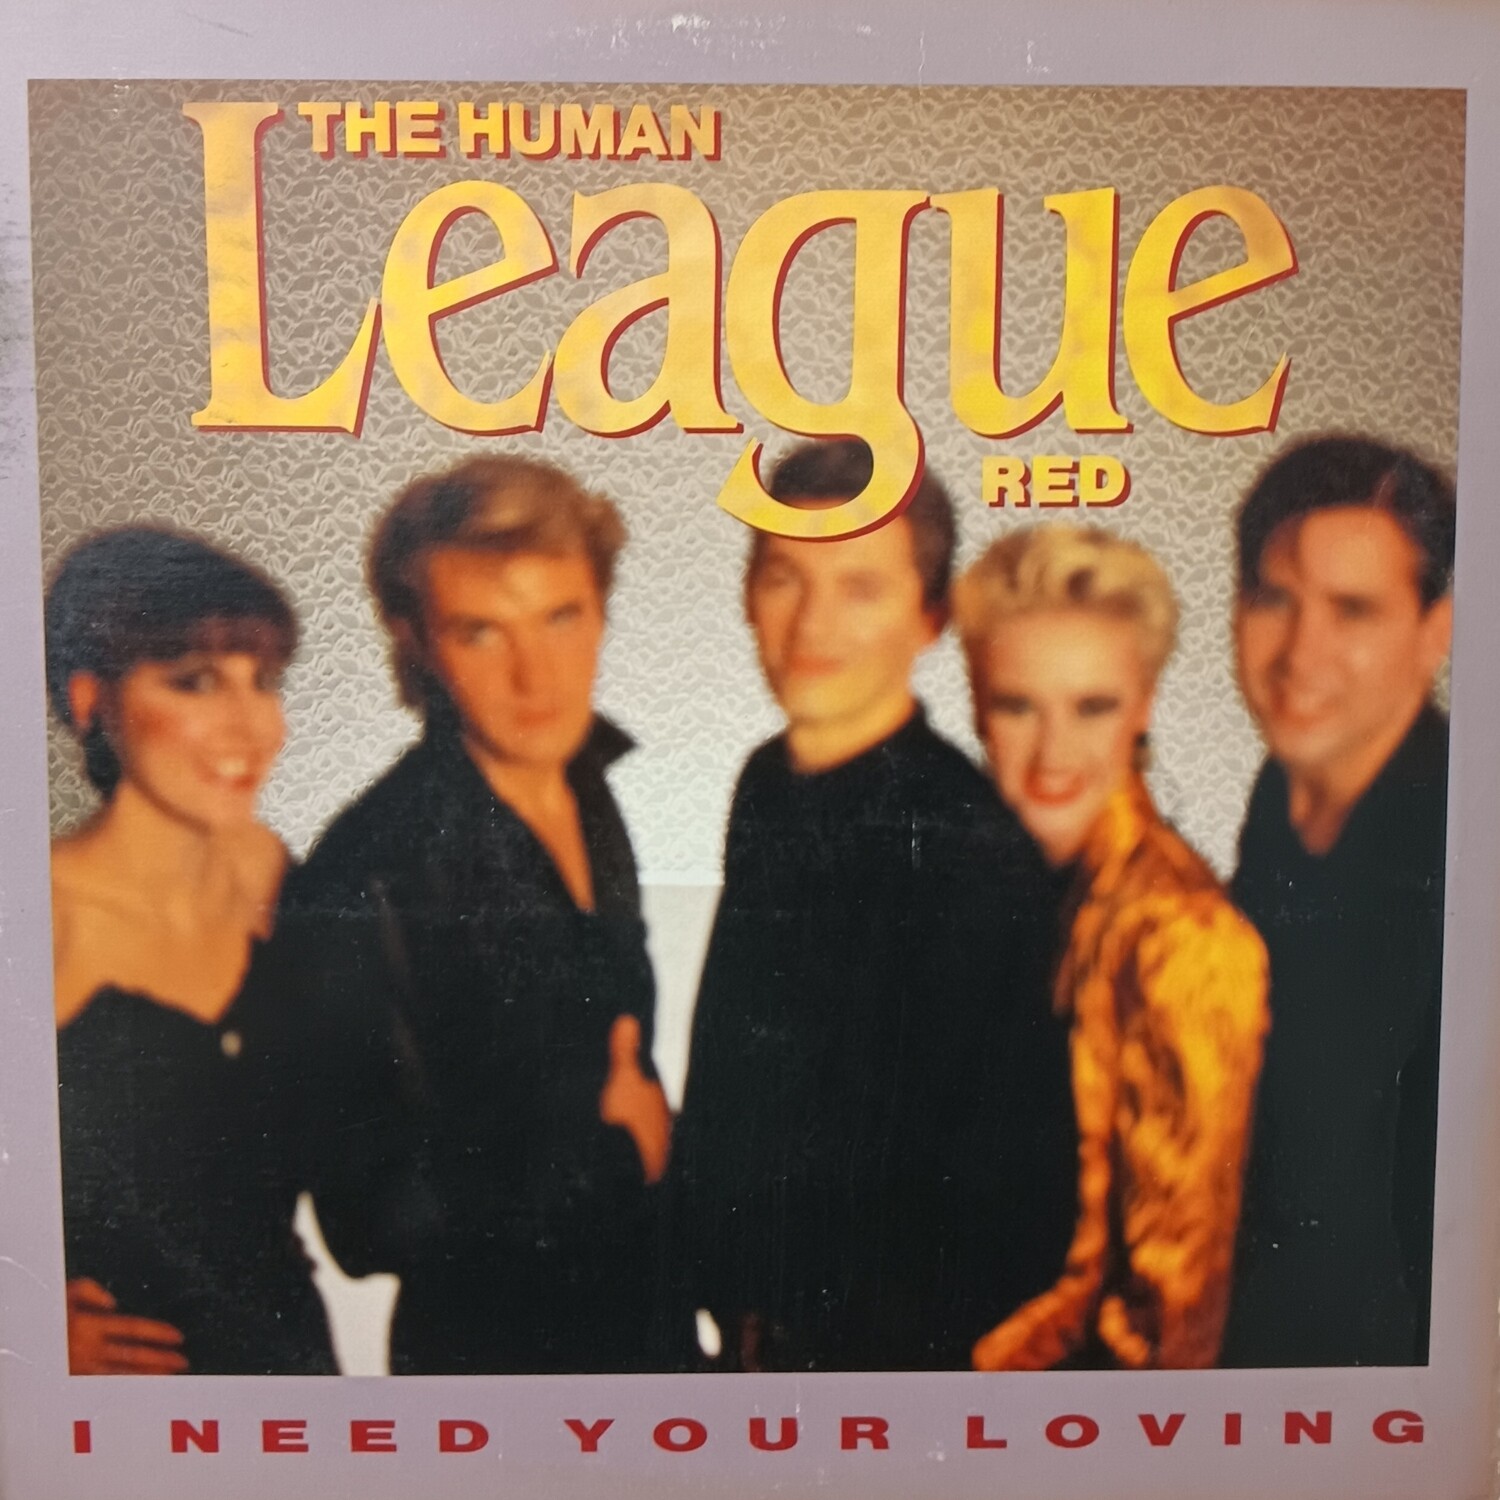 THE HUMAN LEAGUE - I need your loving (MAXI)